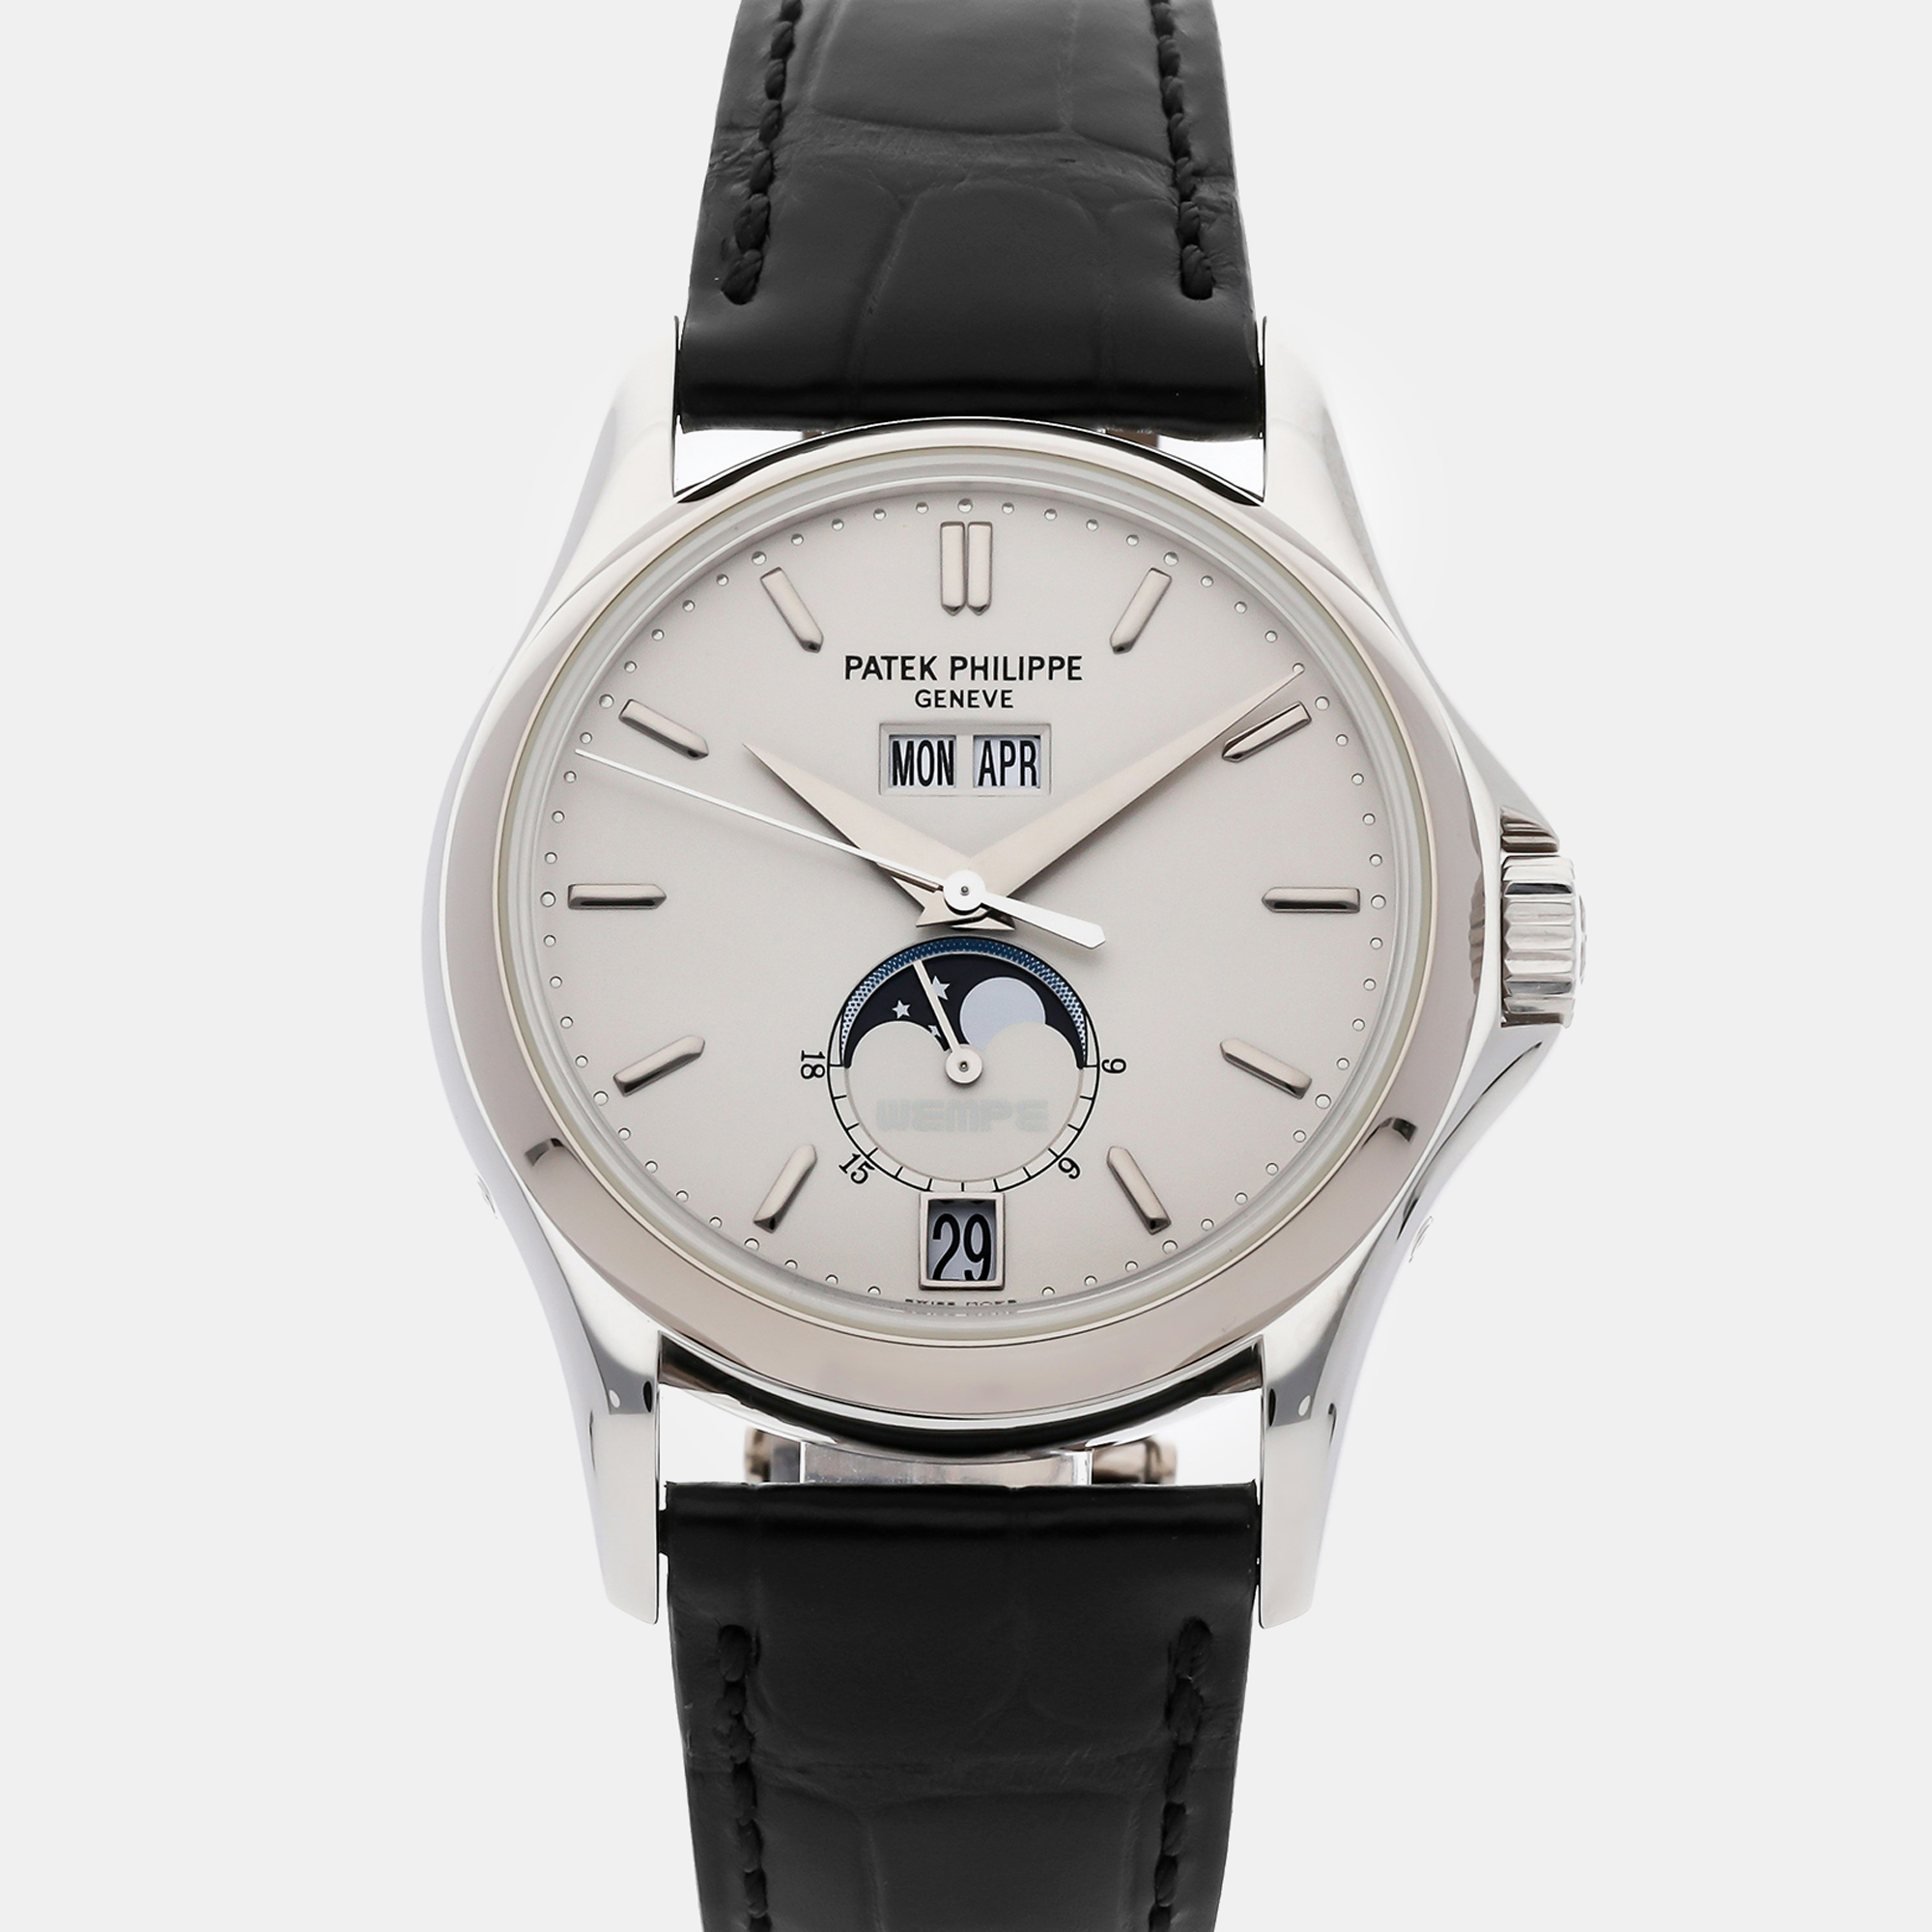 Patek philippe white 18k white gold annual calendar 5125g-010 automatic men's wristwatch 36 mm